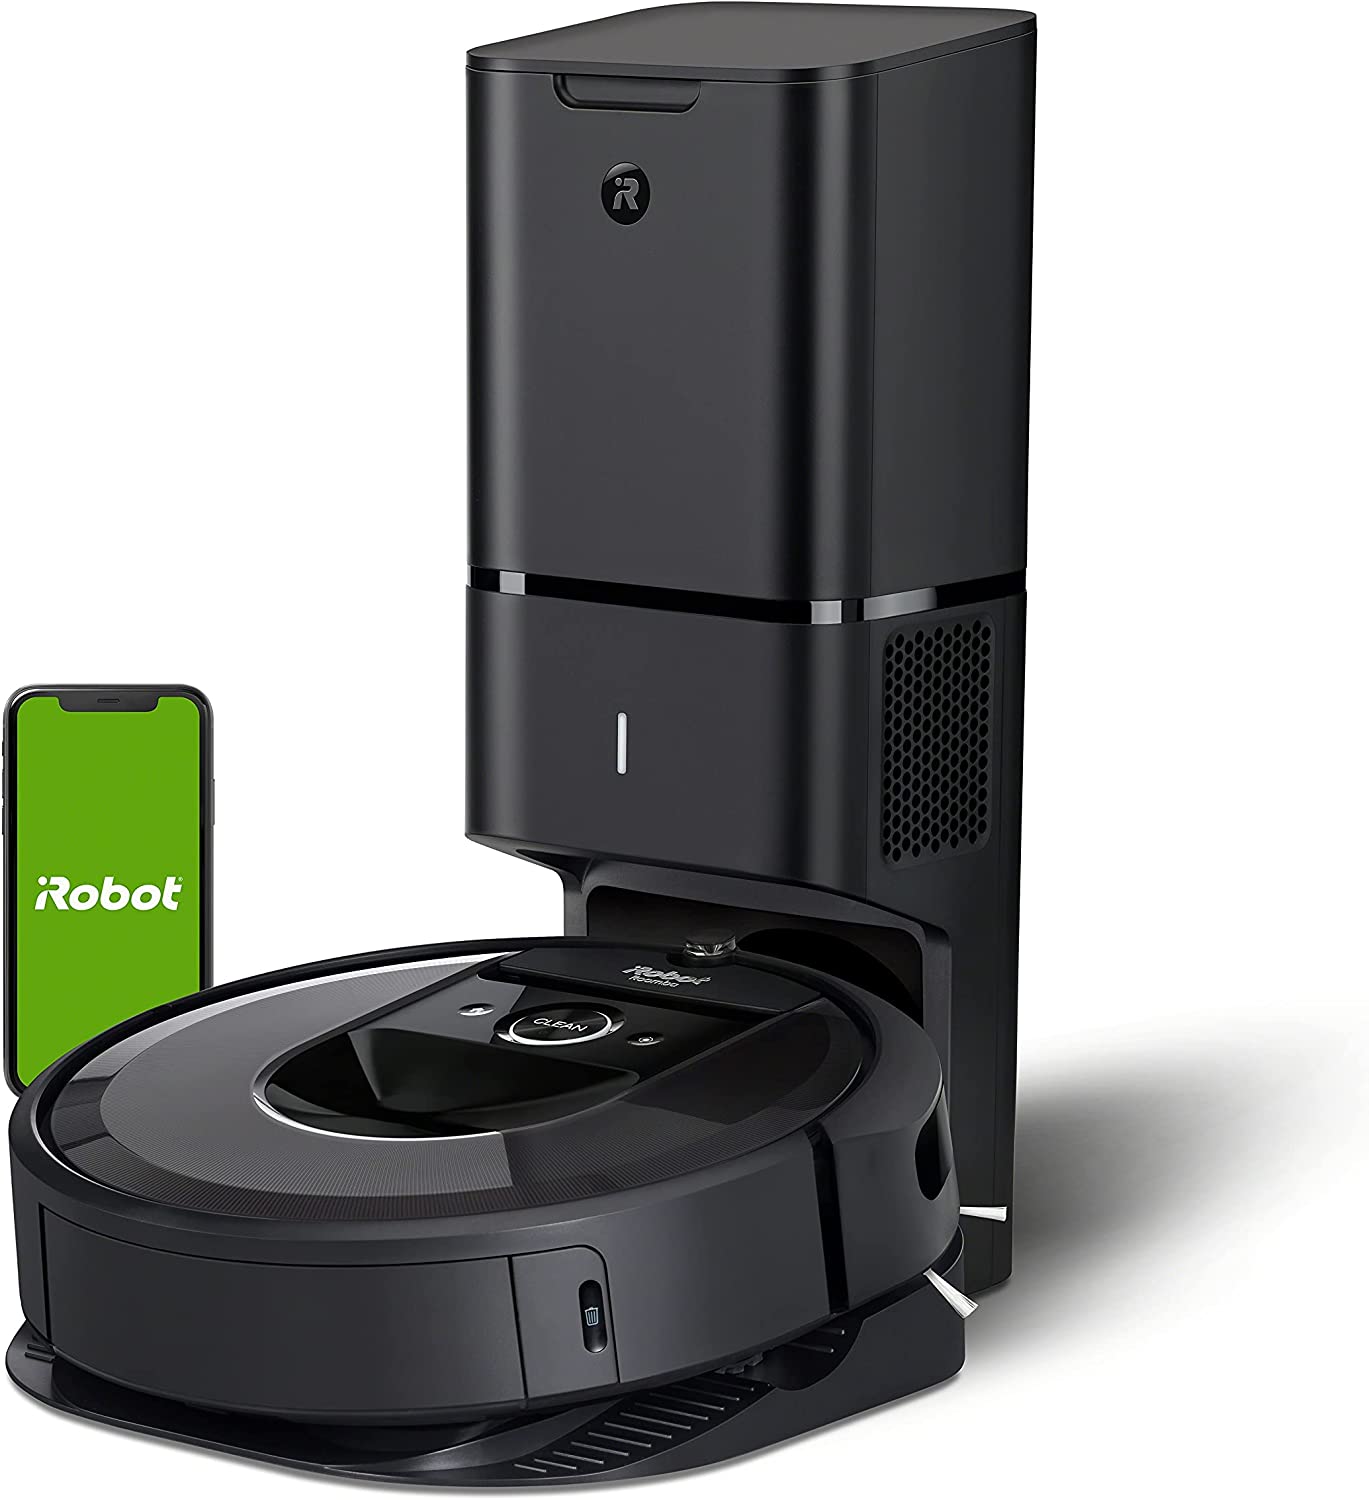 iRobot Roomba i7+ (7550) Robot Vacuum w/ Automatic Dirt Disposal $500 + Free Shipping